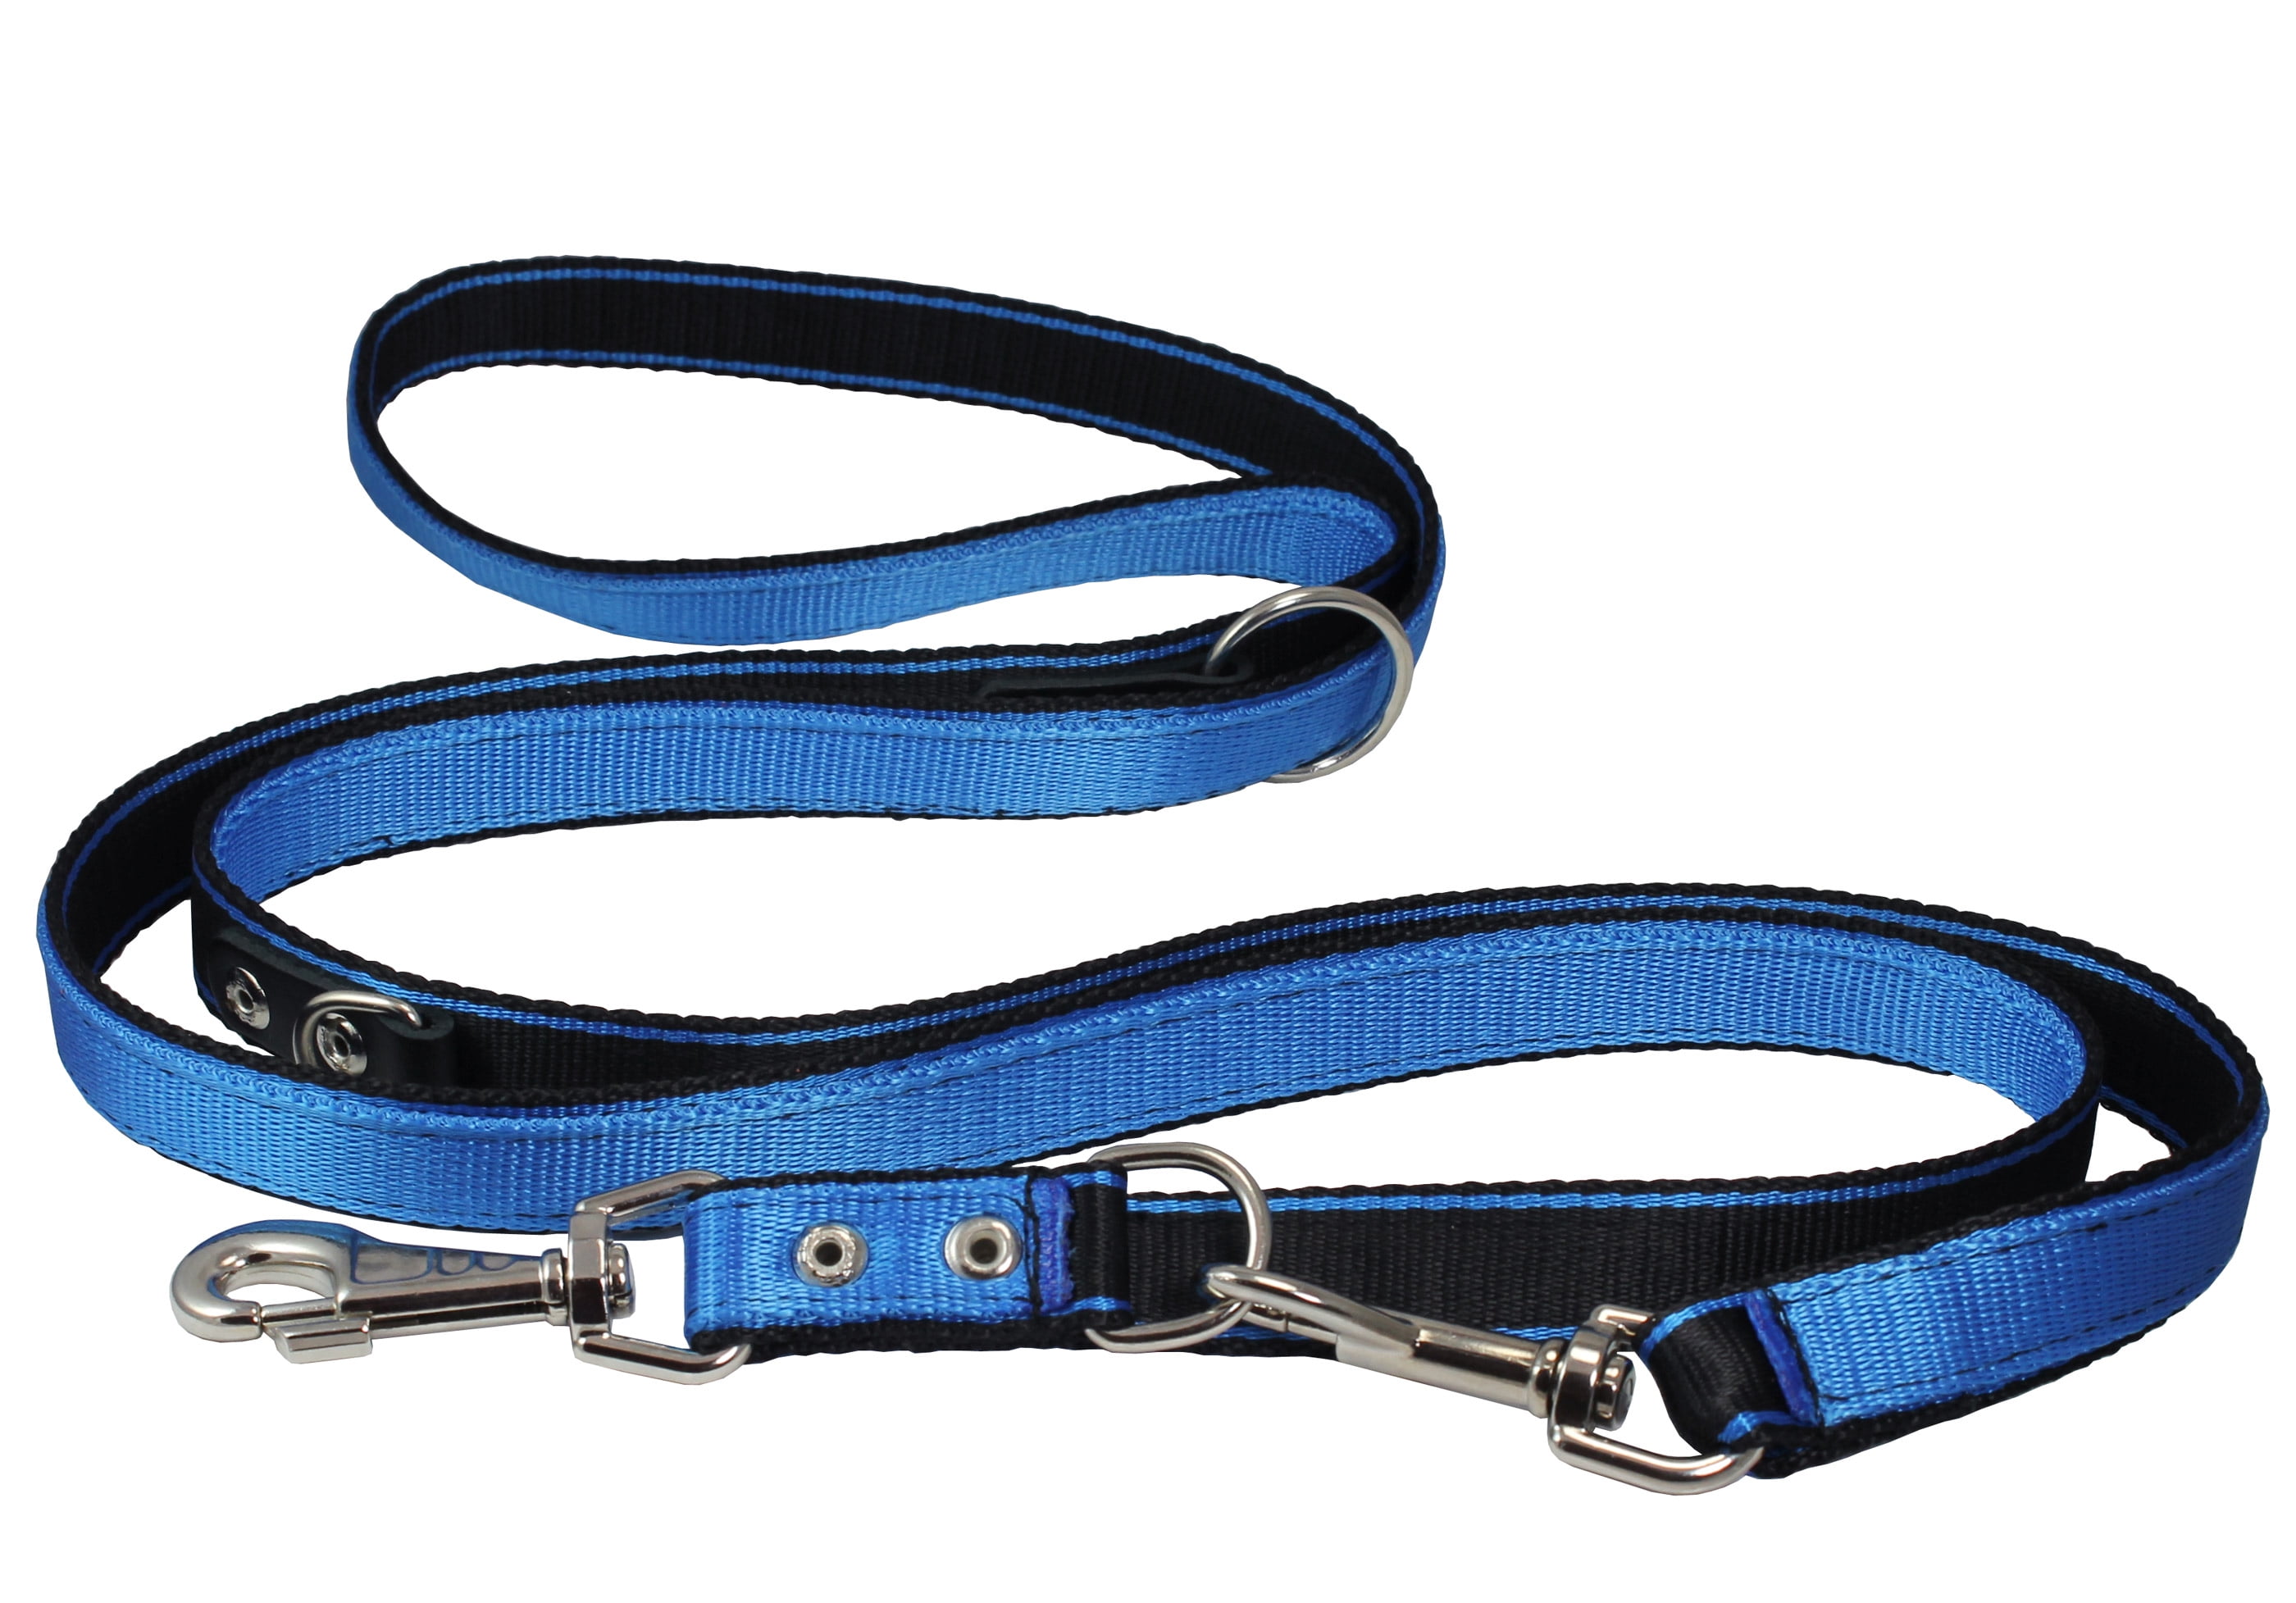 Bridle Leather Dog Leash Schutzhund 6-Way European Design 60"up to 110" long